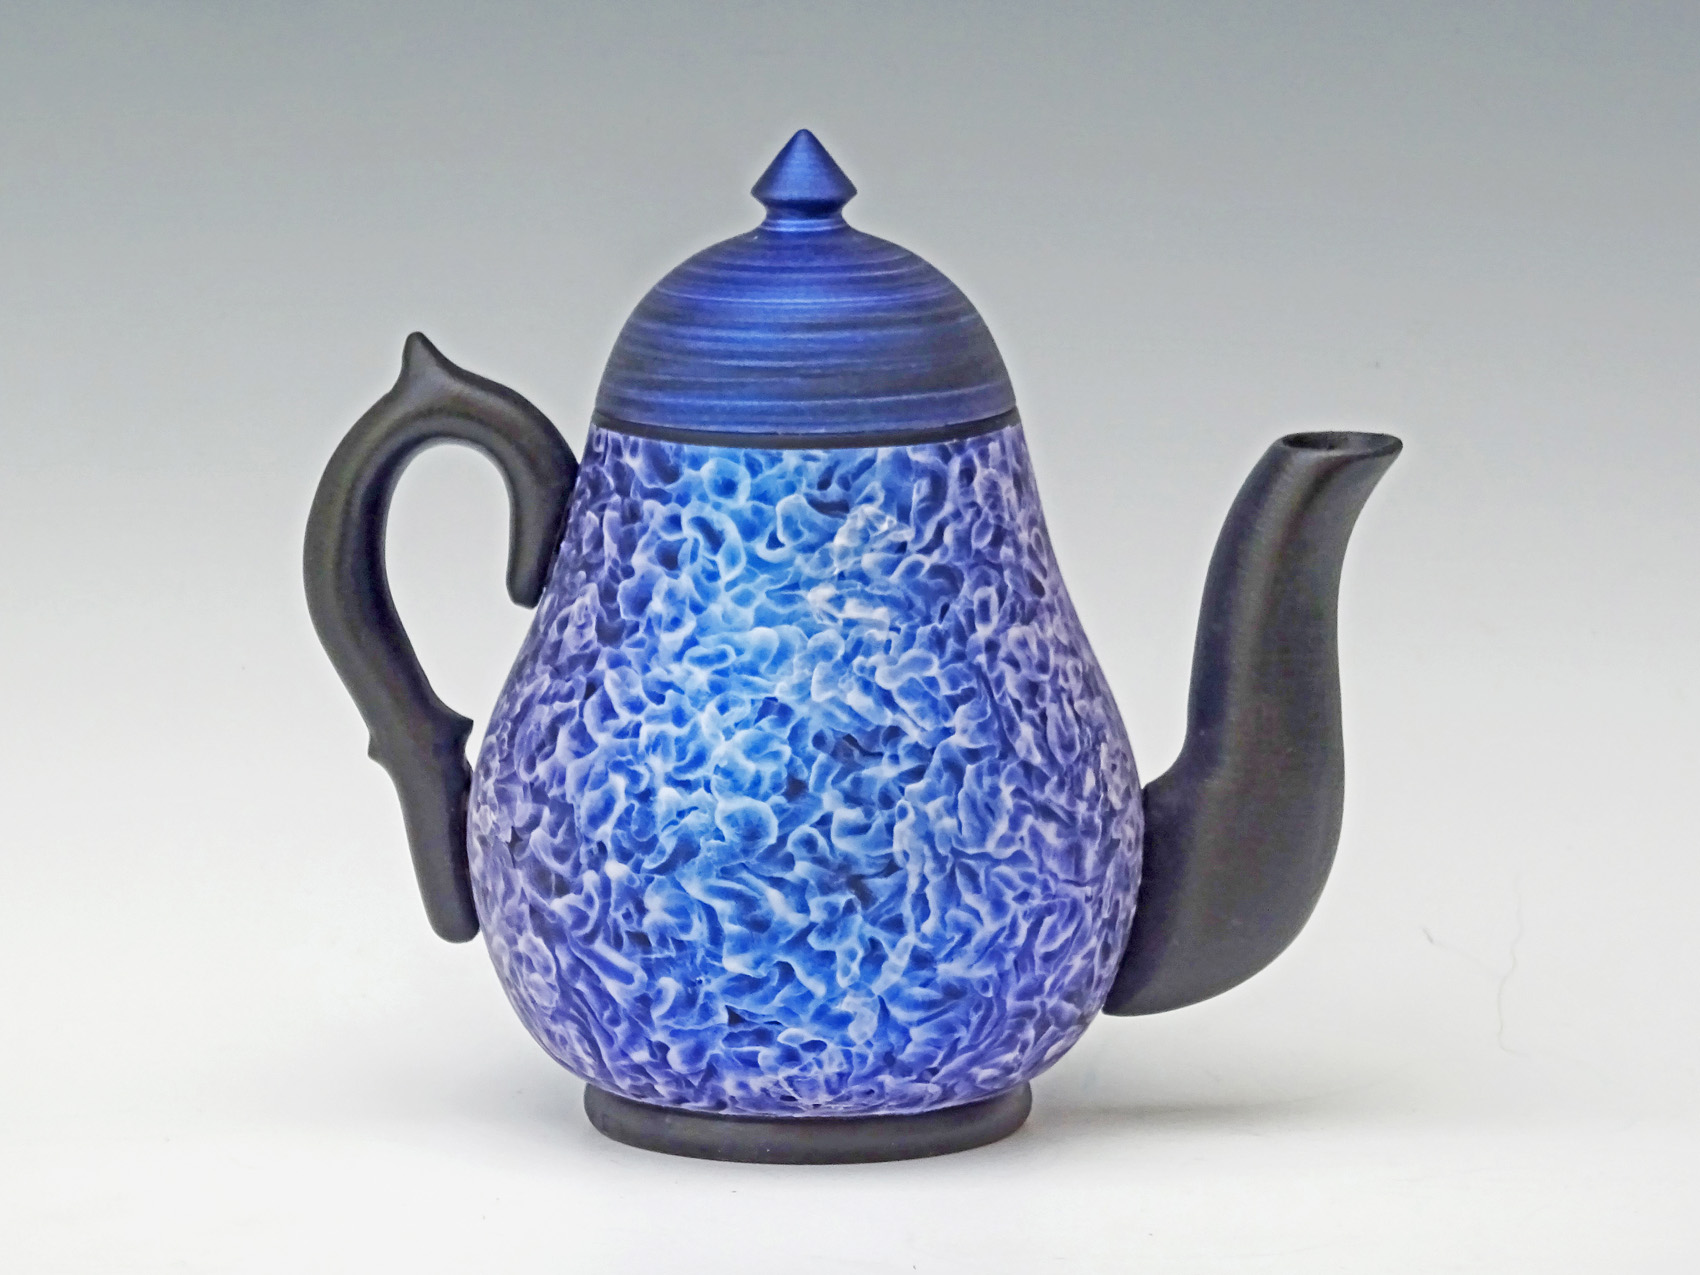 Victorian shaped teapot